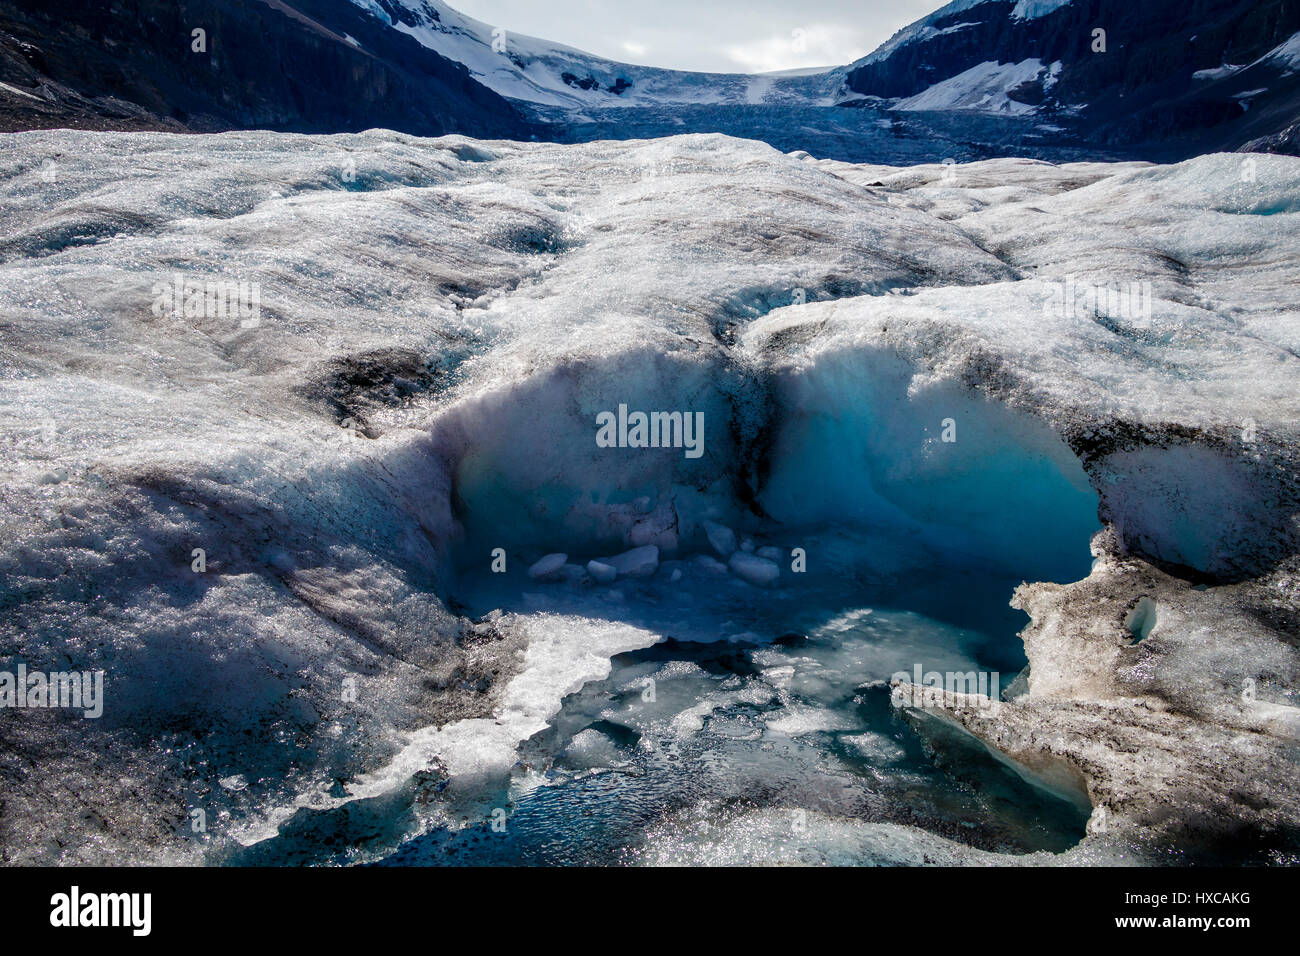 Columbia Icefield Athabasca Glacier, Jasper National Park, Canada. Stock Photo